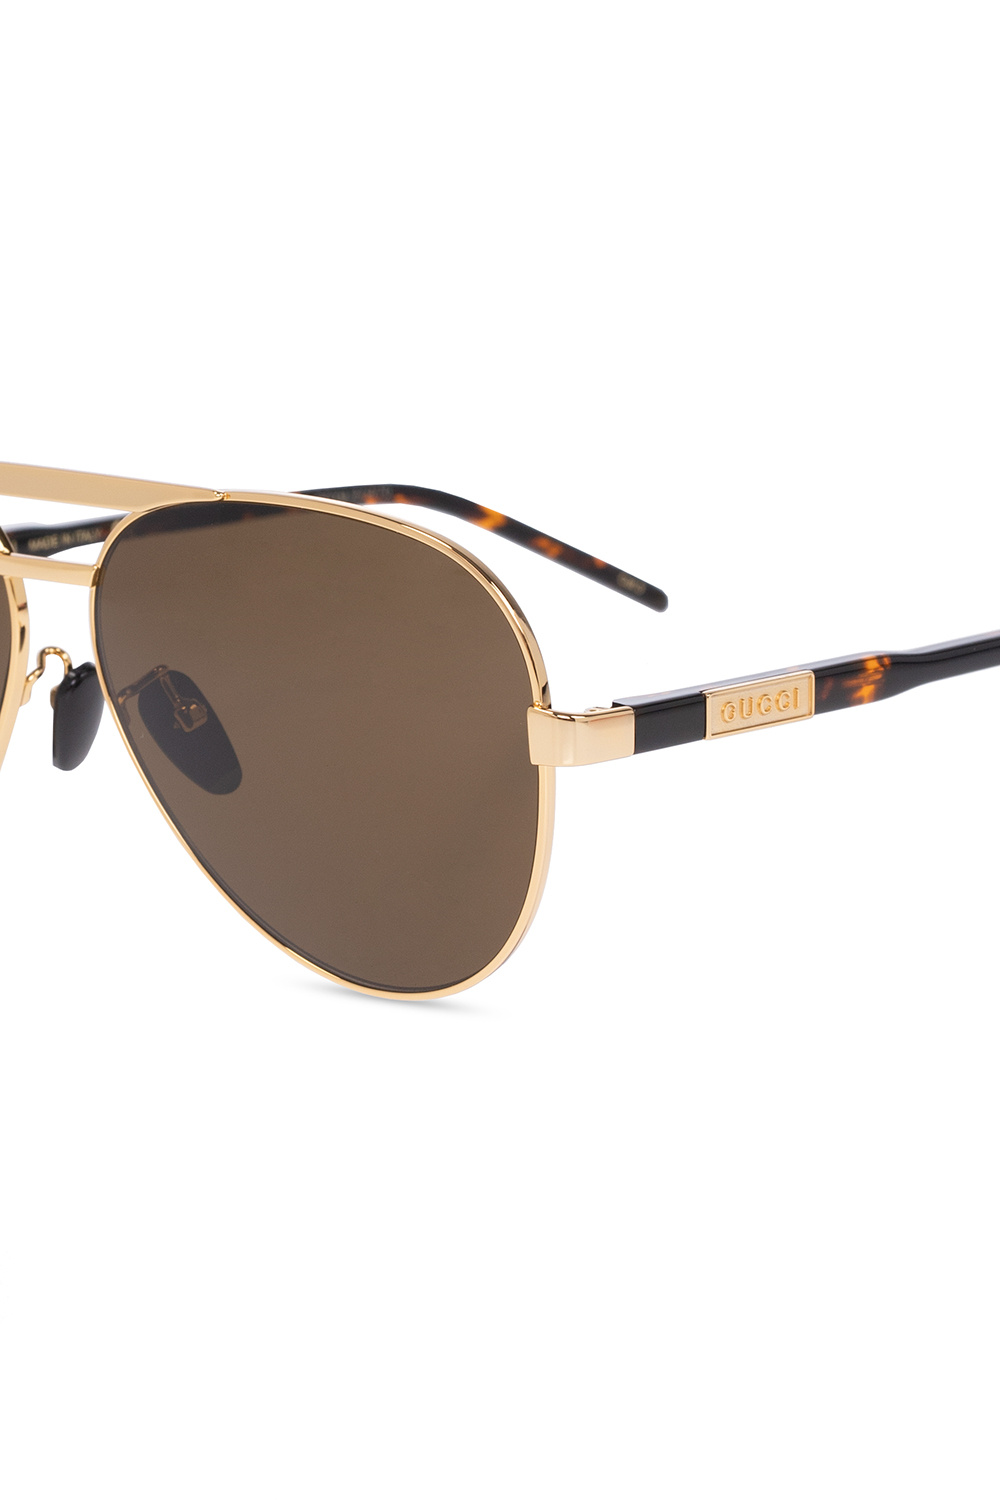 Gucci sunglasses Schwarz with logo